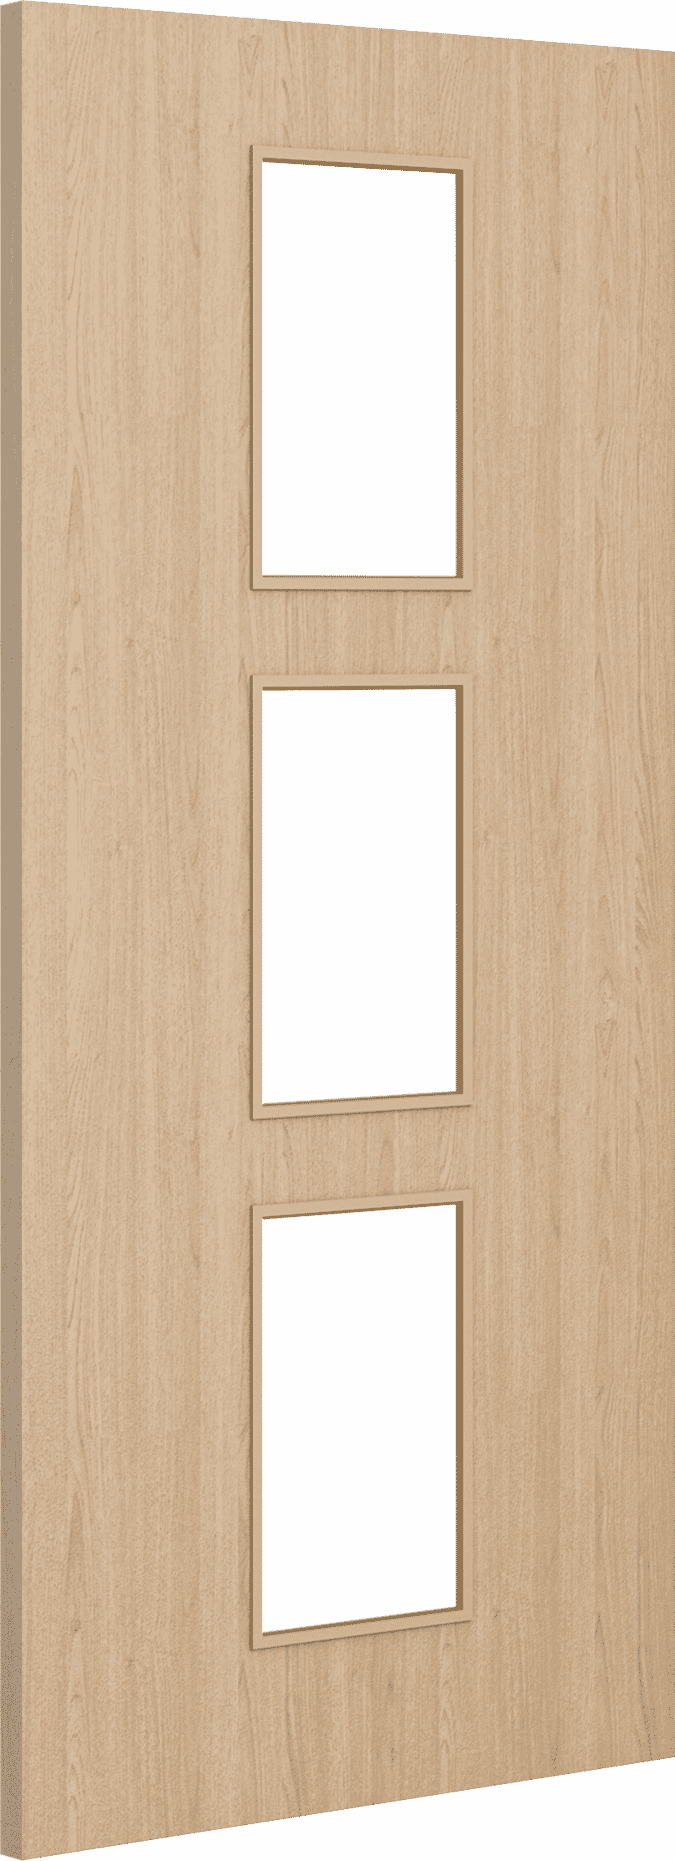 2040mm x 426mm x 44mm Architectural Oak 11 Frosted Glazed - Prefinished FD30 Fire Door Blank